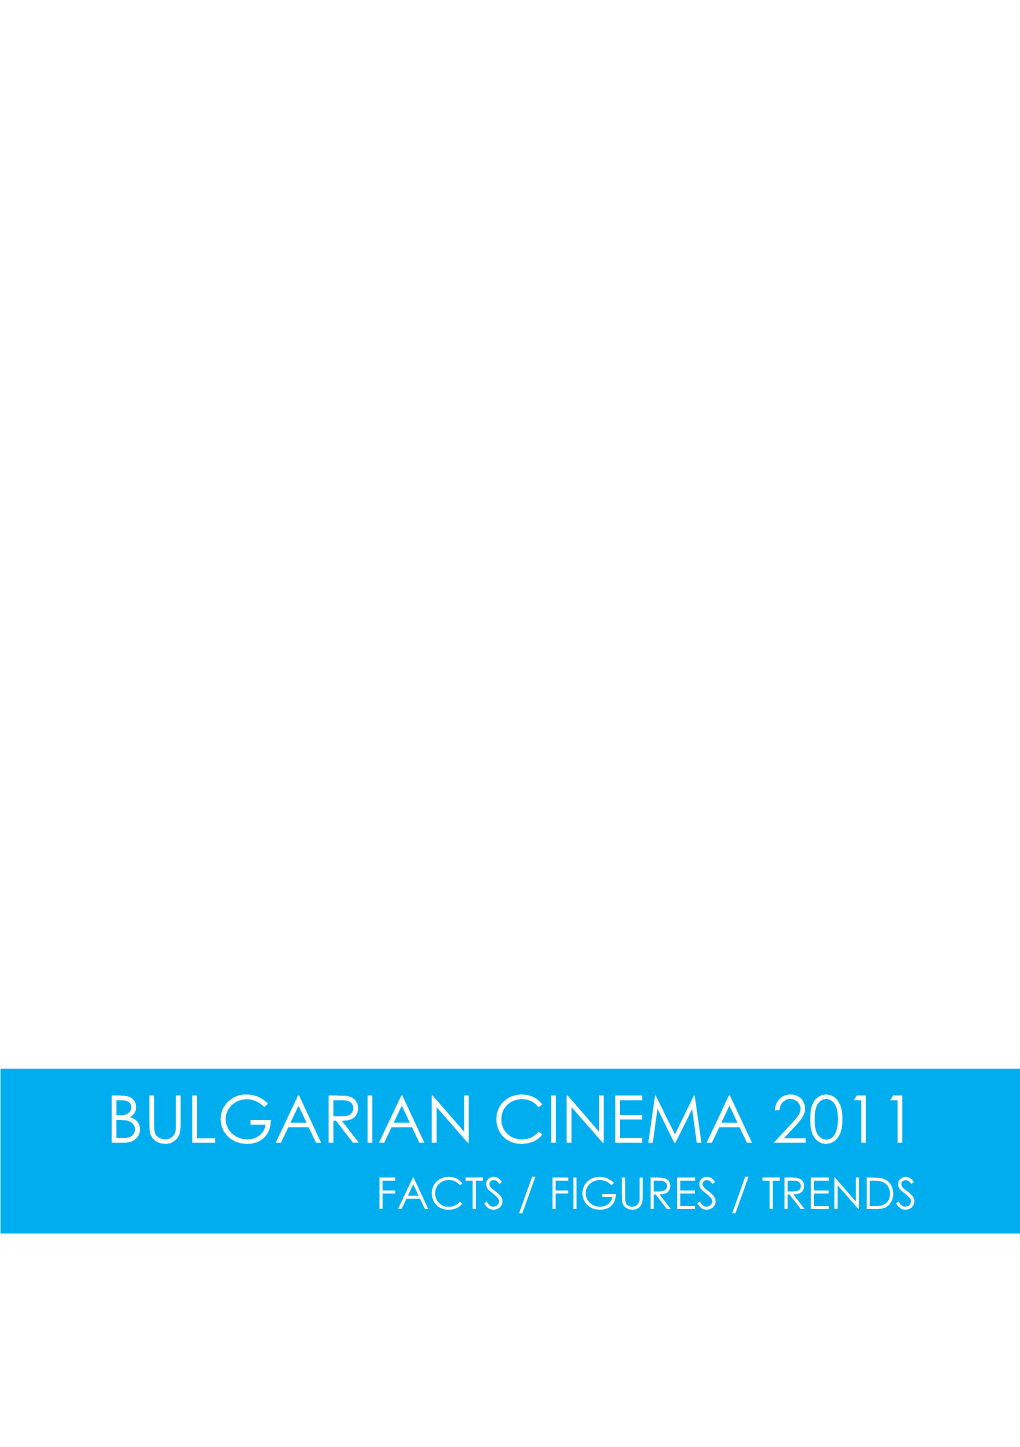 Bulgarian Cinema 2011 Facts / Figures / Trends Editorial